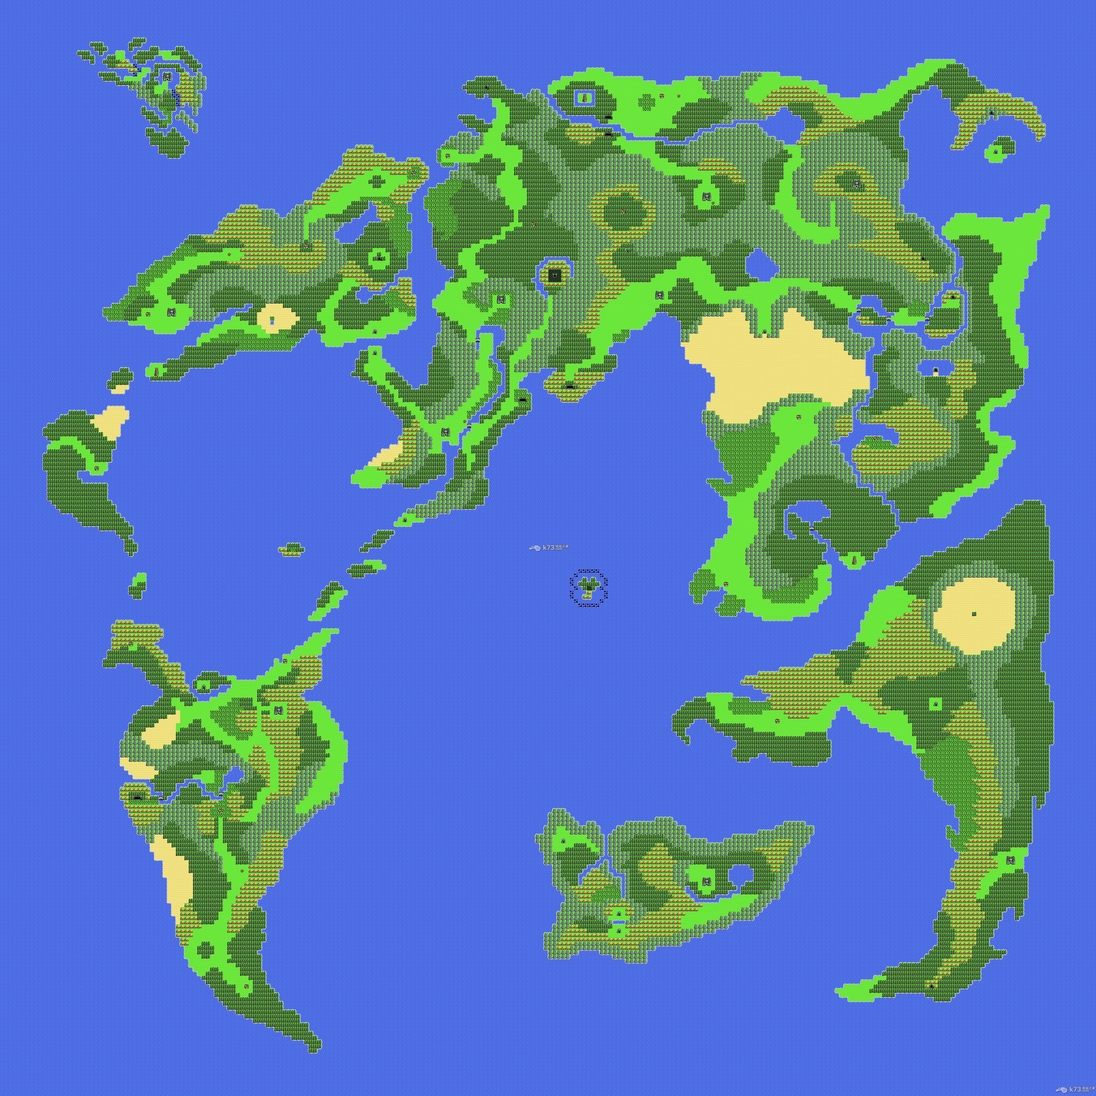 fc勇者斗恶龙4全世界地图真实1:1比例_电玩之